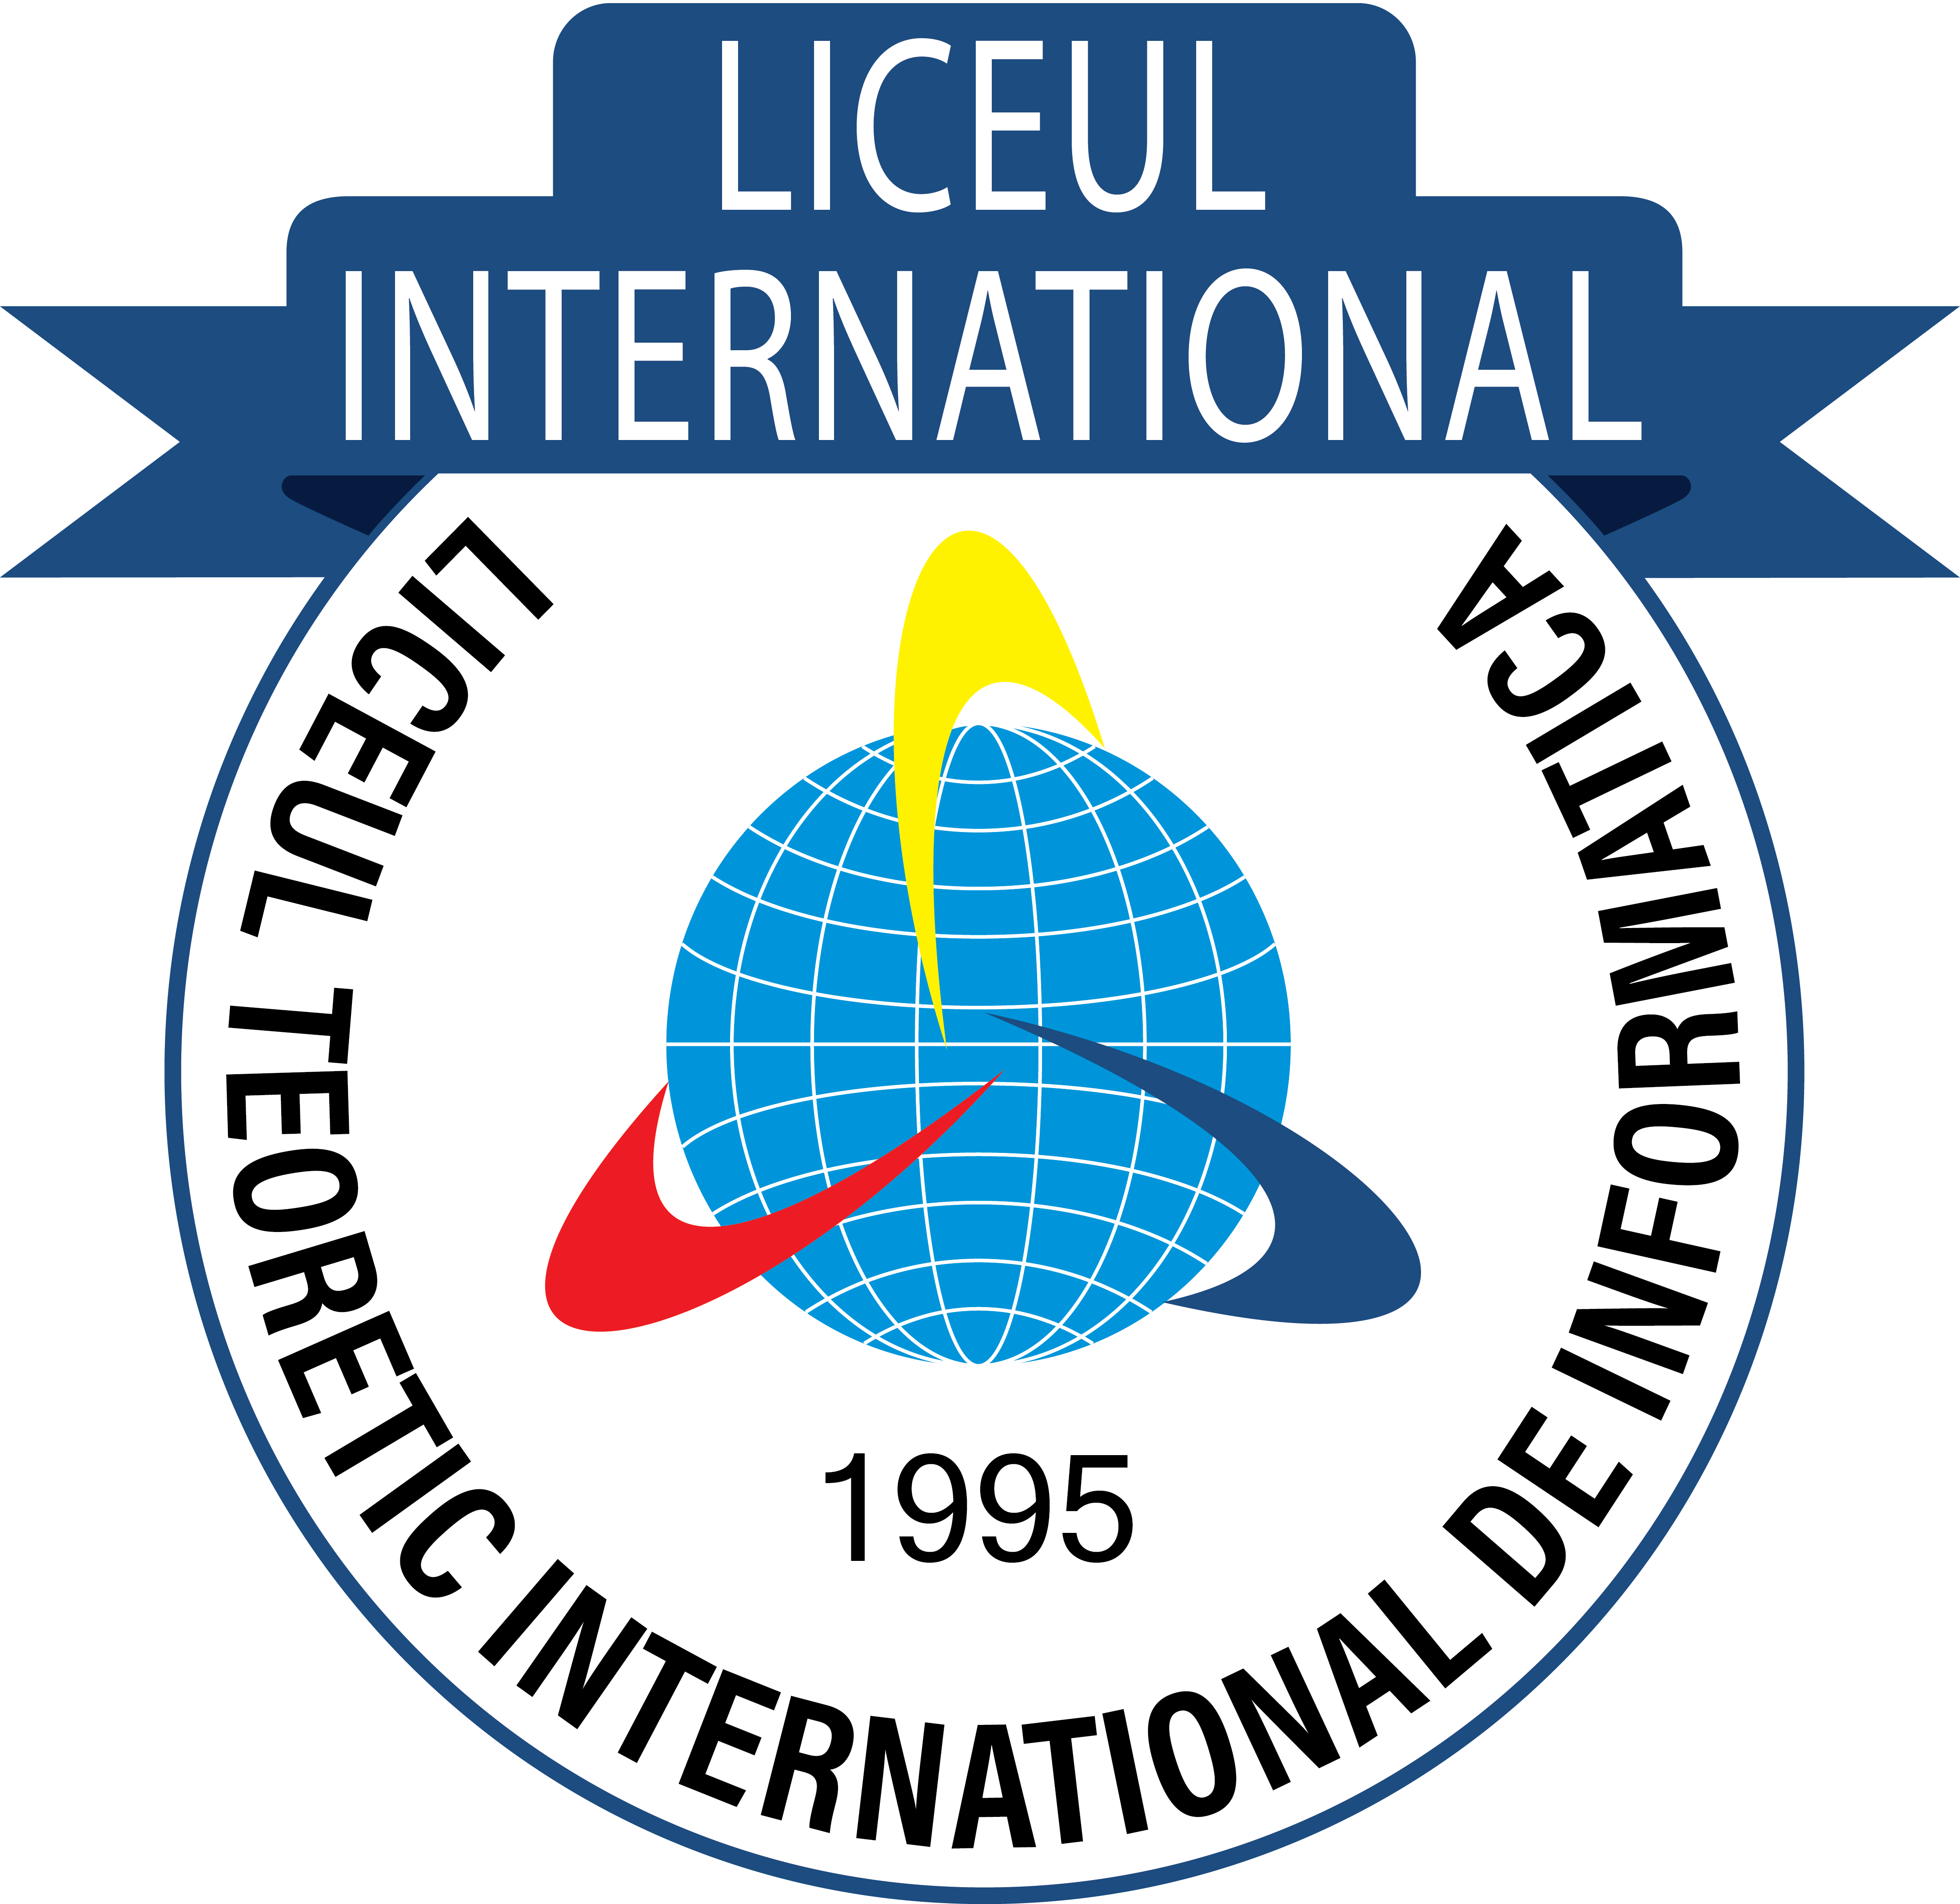 ICHB logo